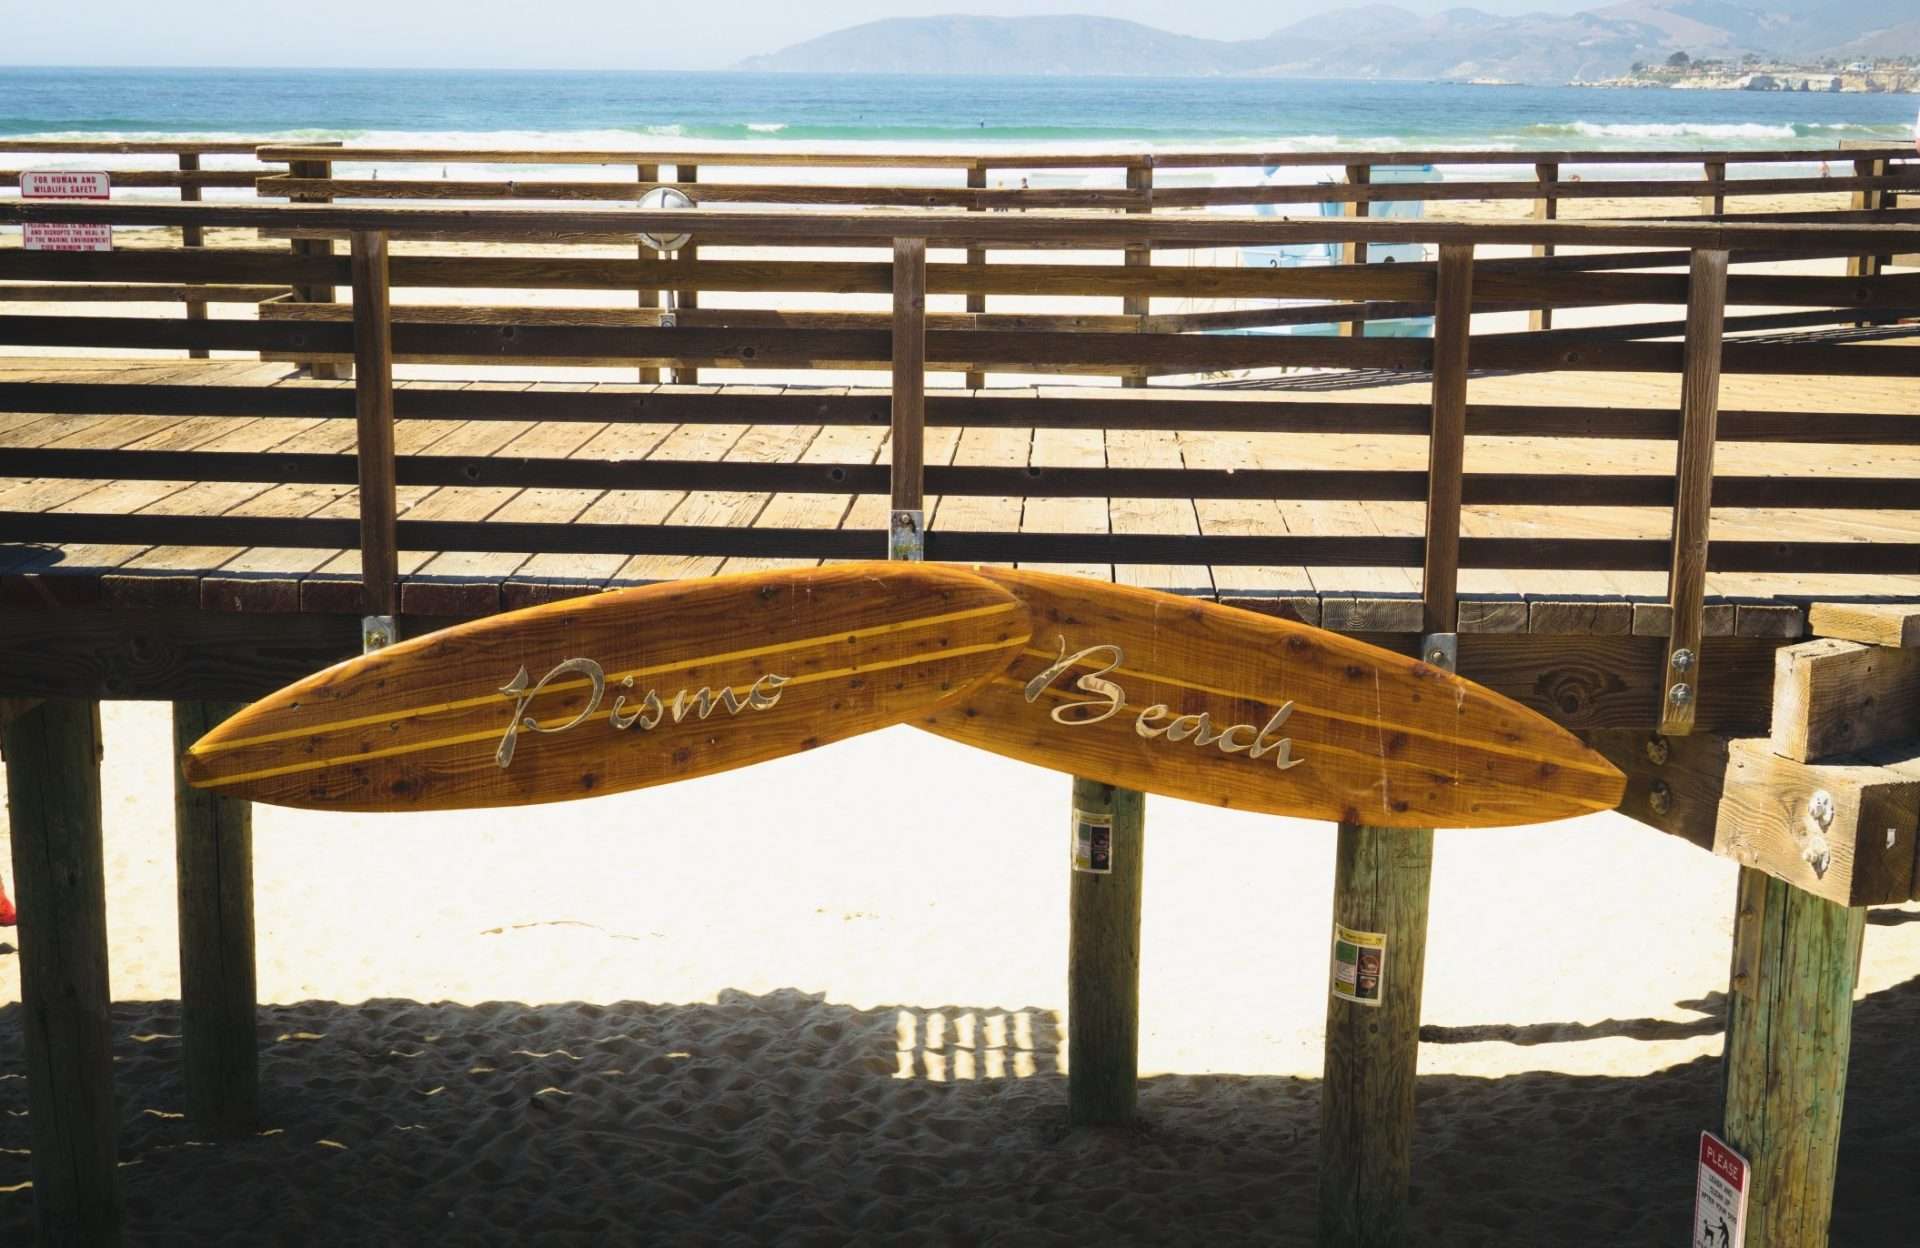 pismo beach surf board sign